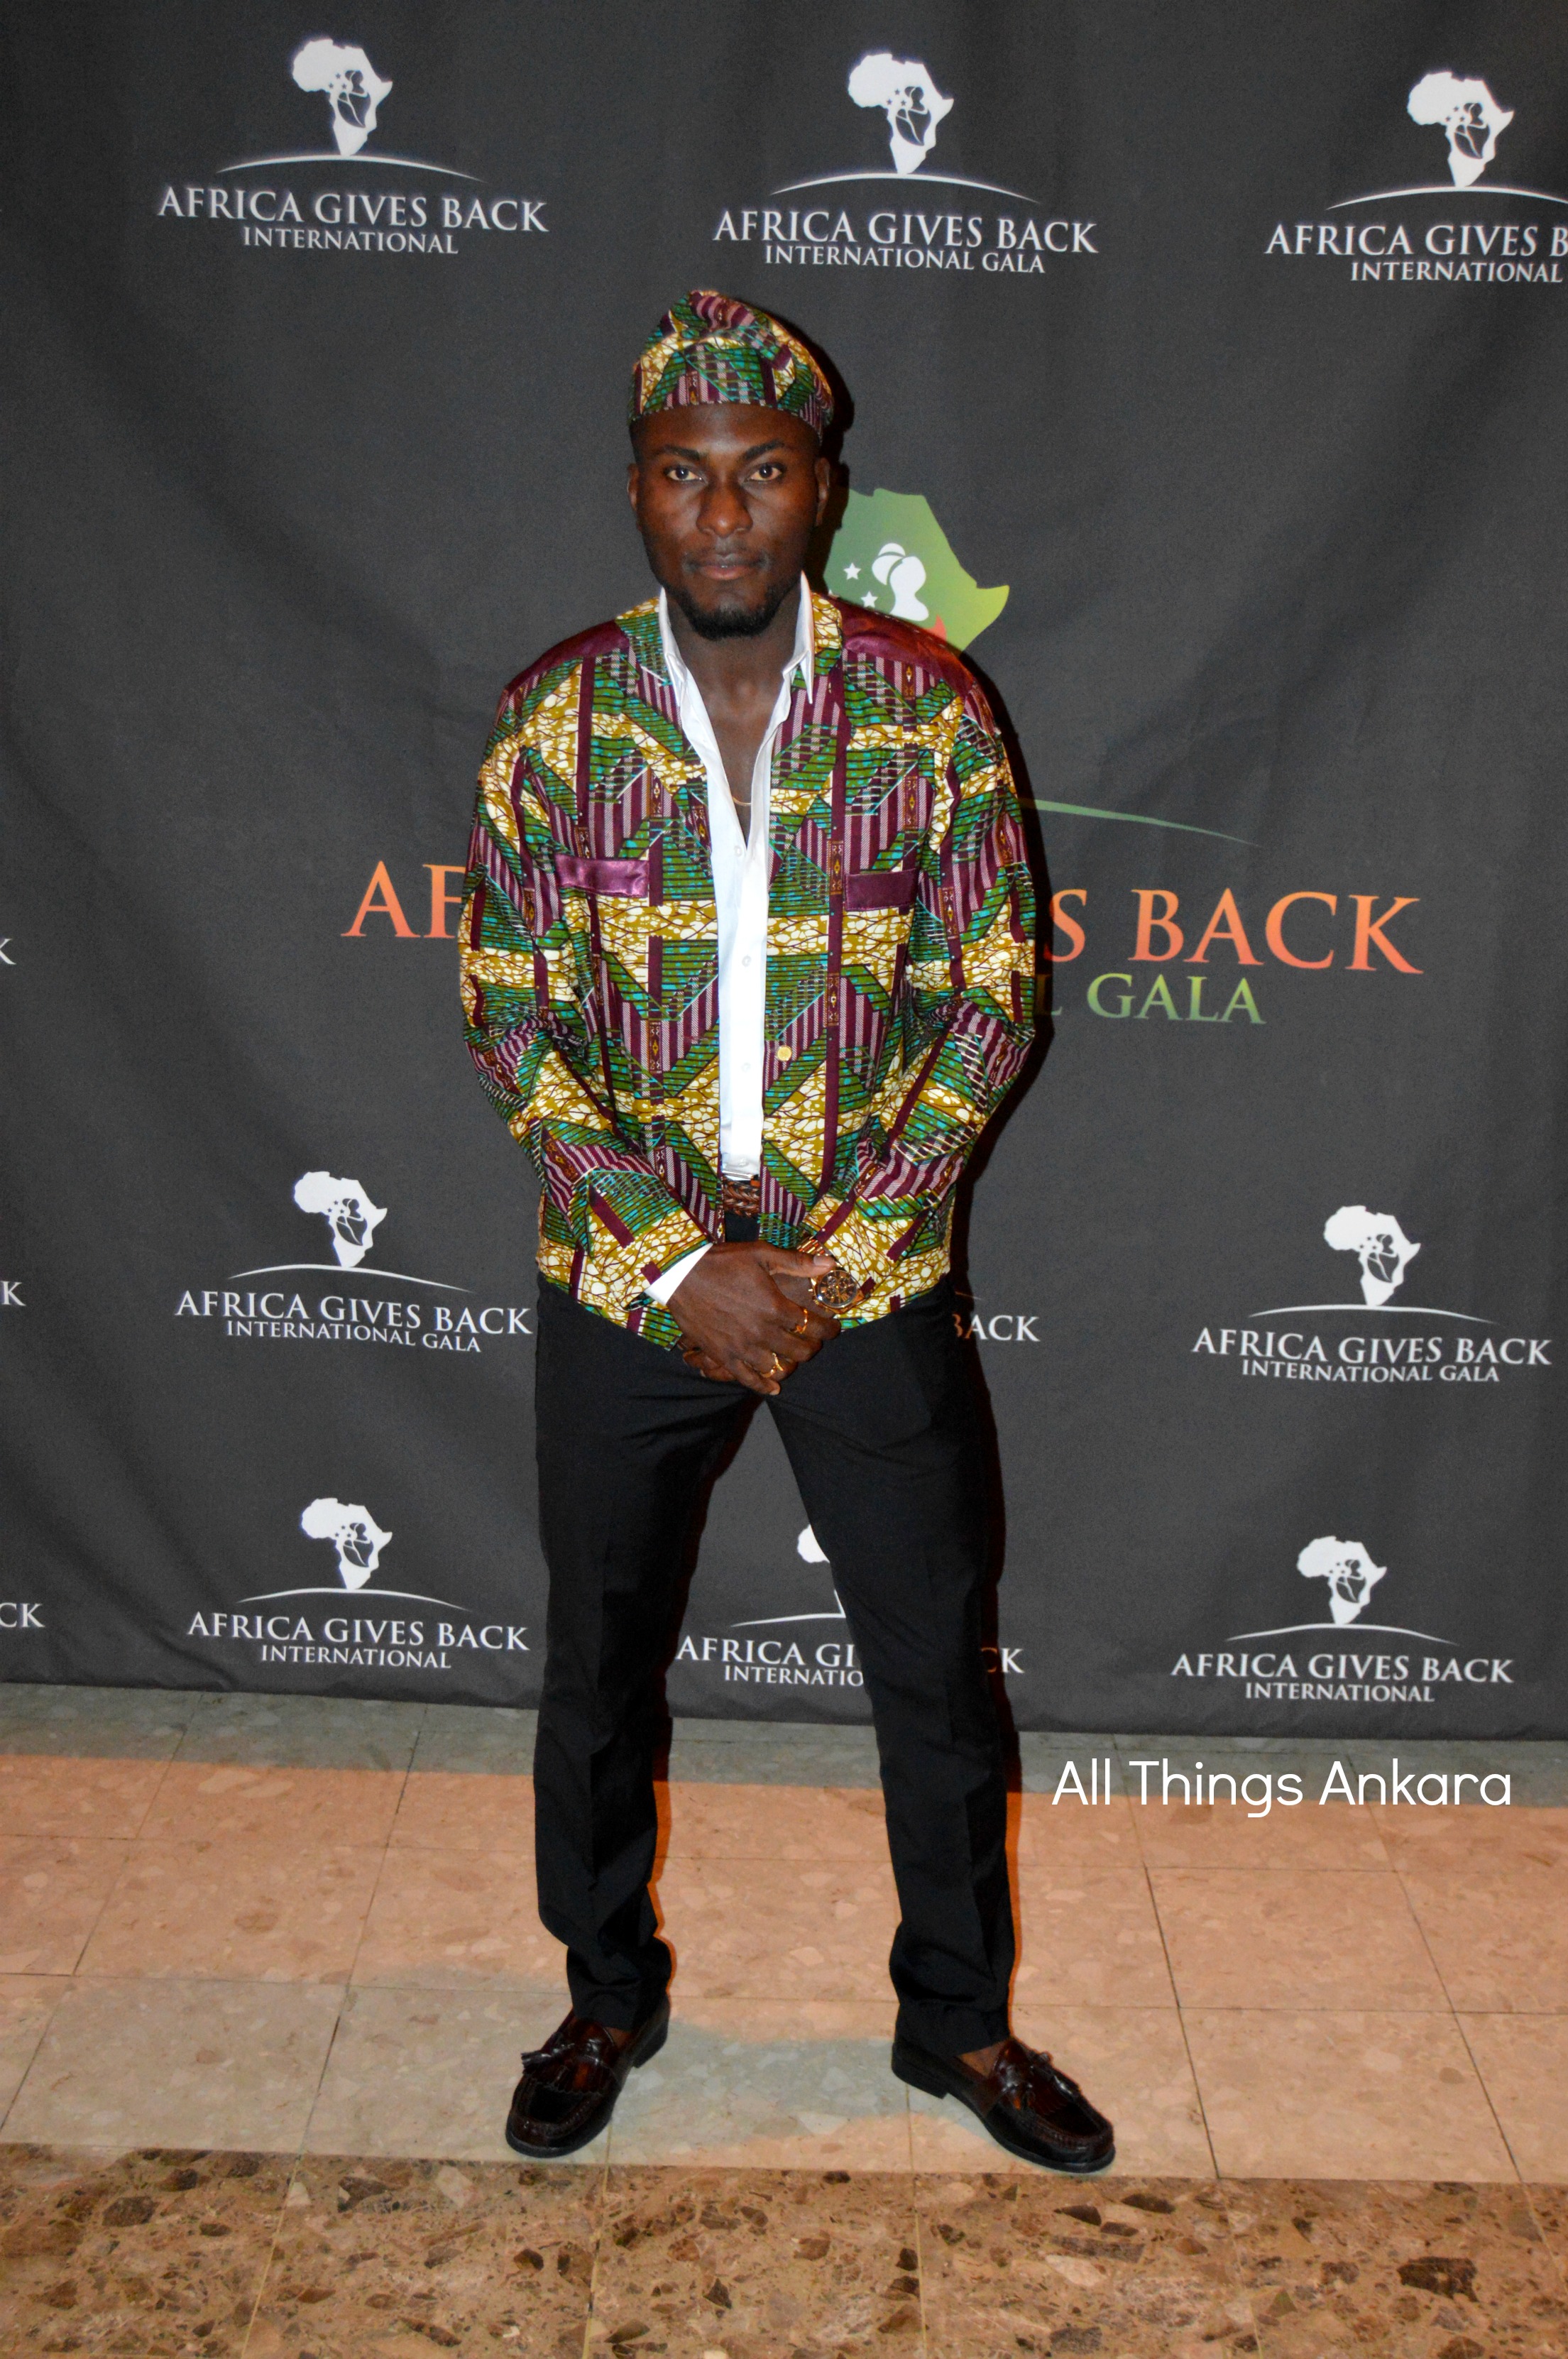 Gala-All Things Ankara's Best Dressed Men at Africa Gives Back International Gala 2016 1